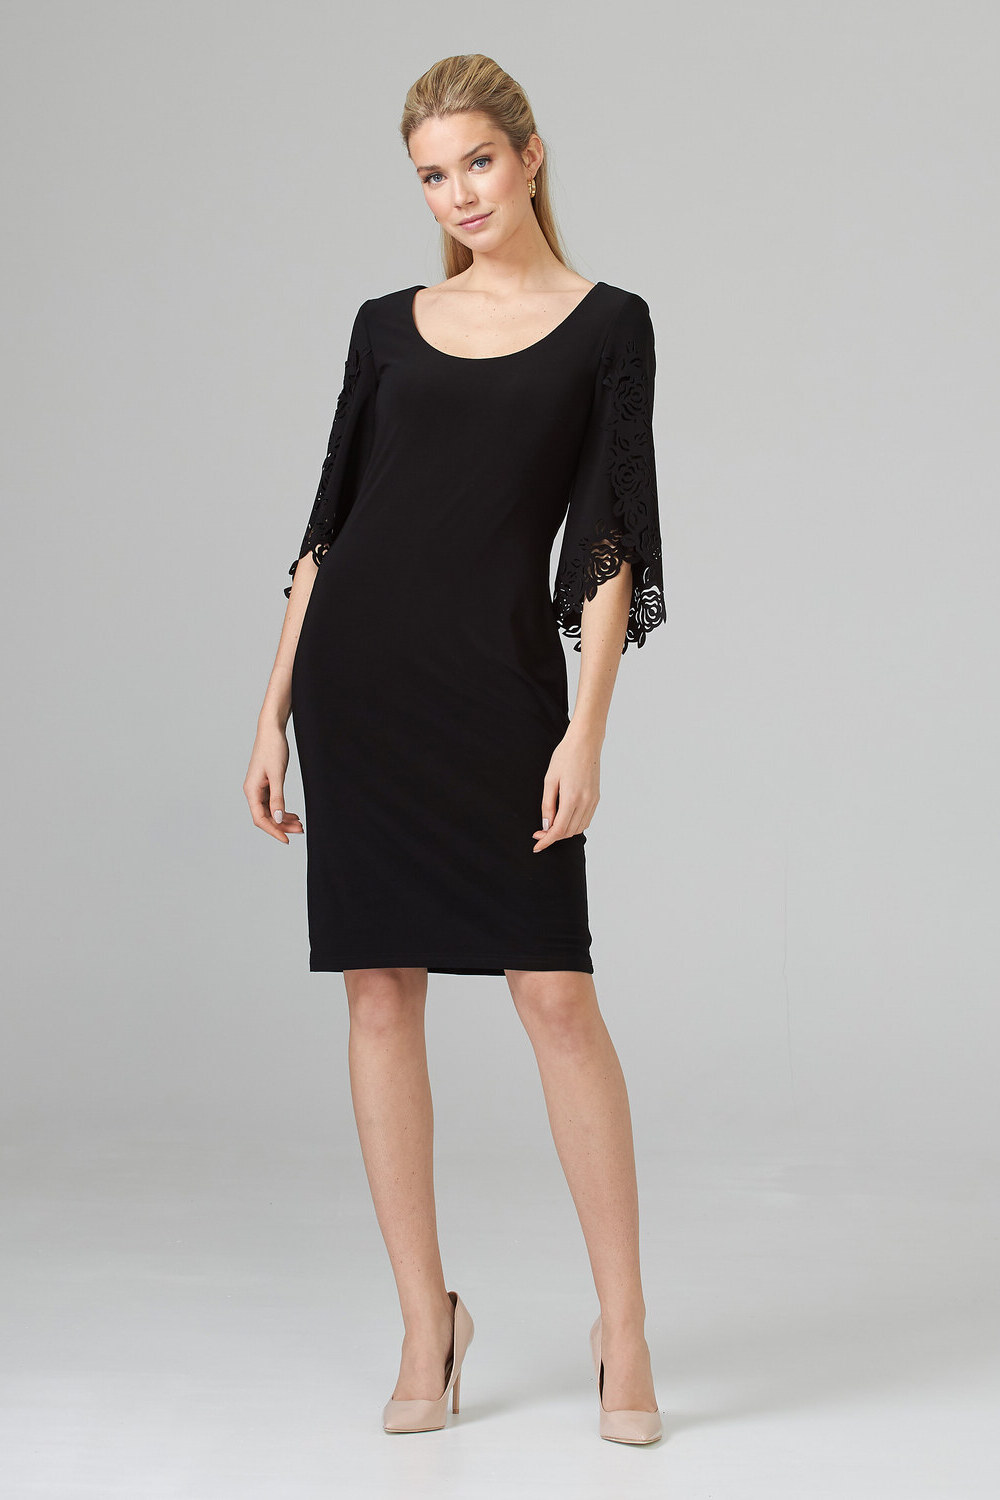 Joseph Ribkoff Dress Style 201320. Black